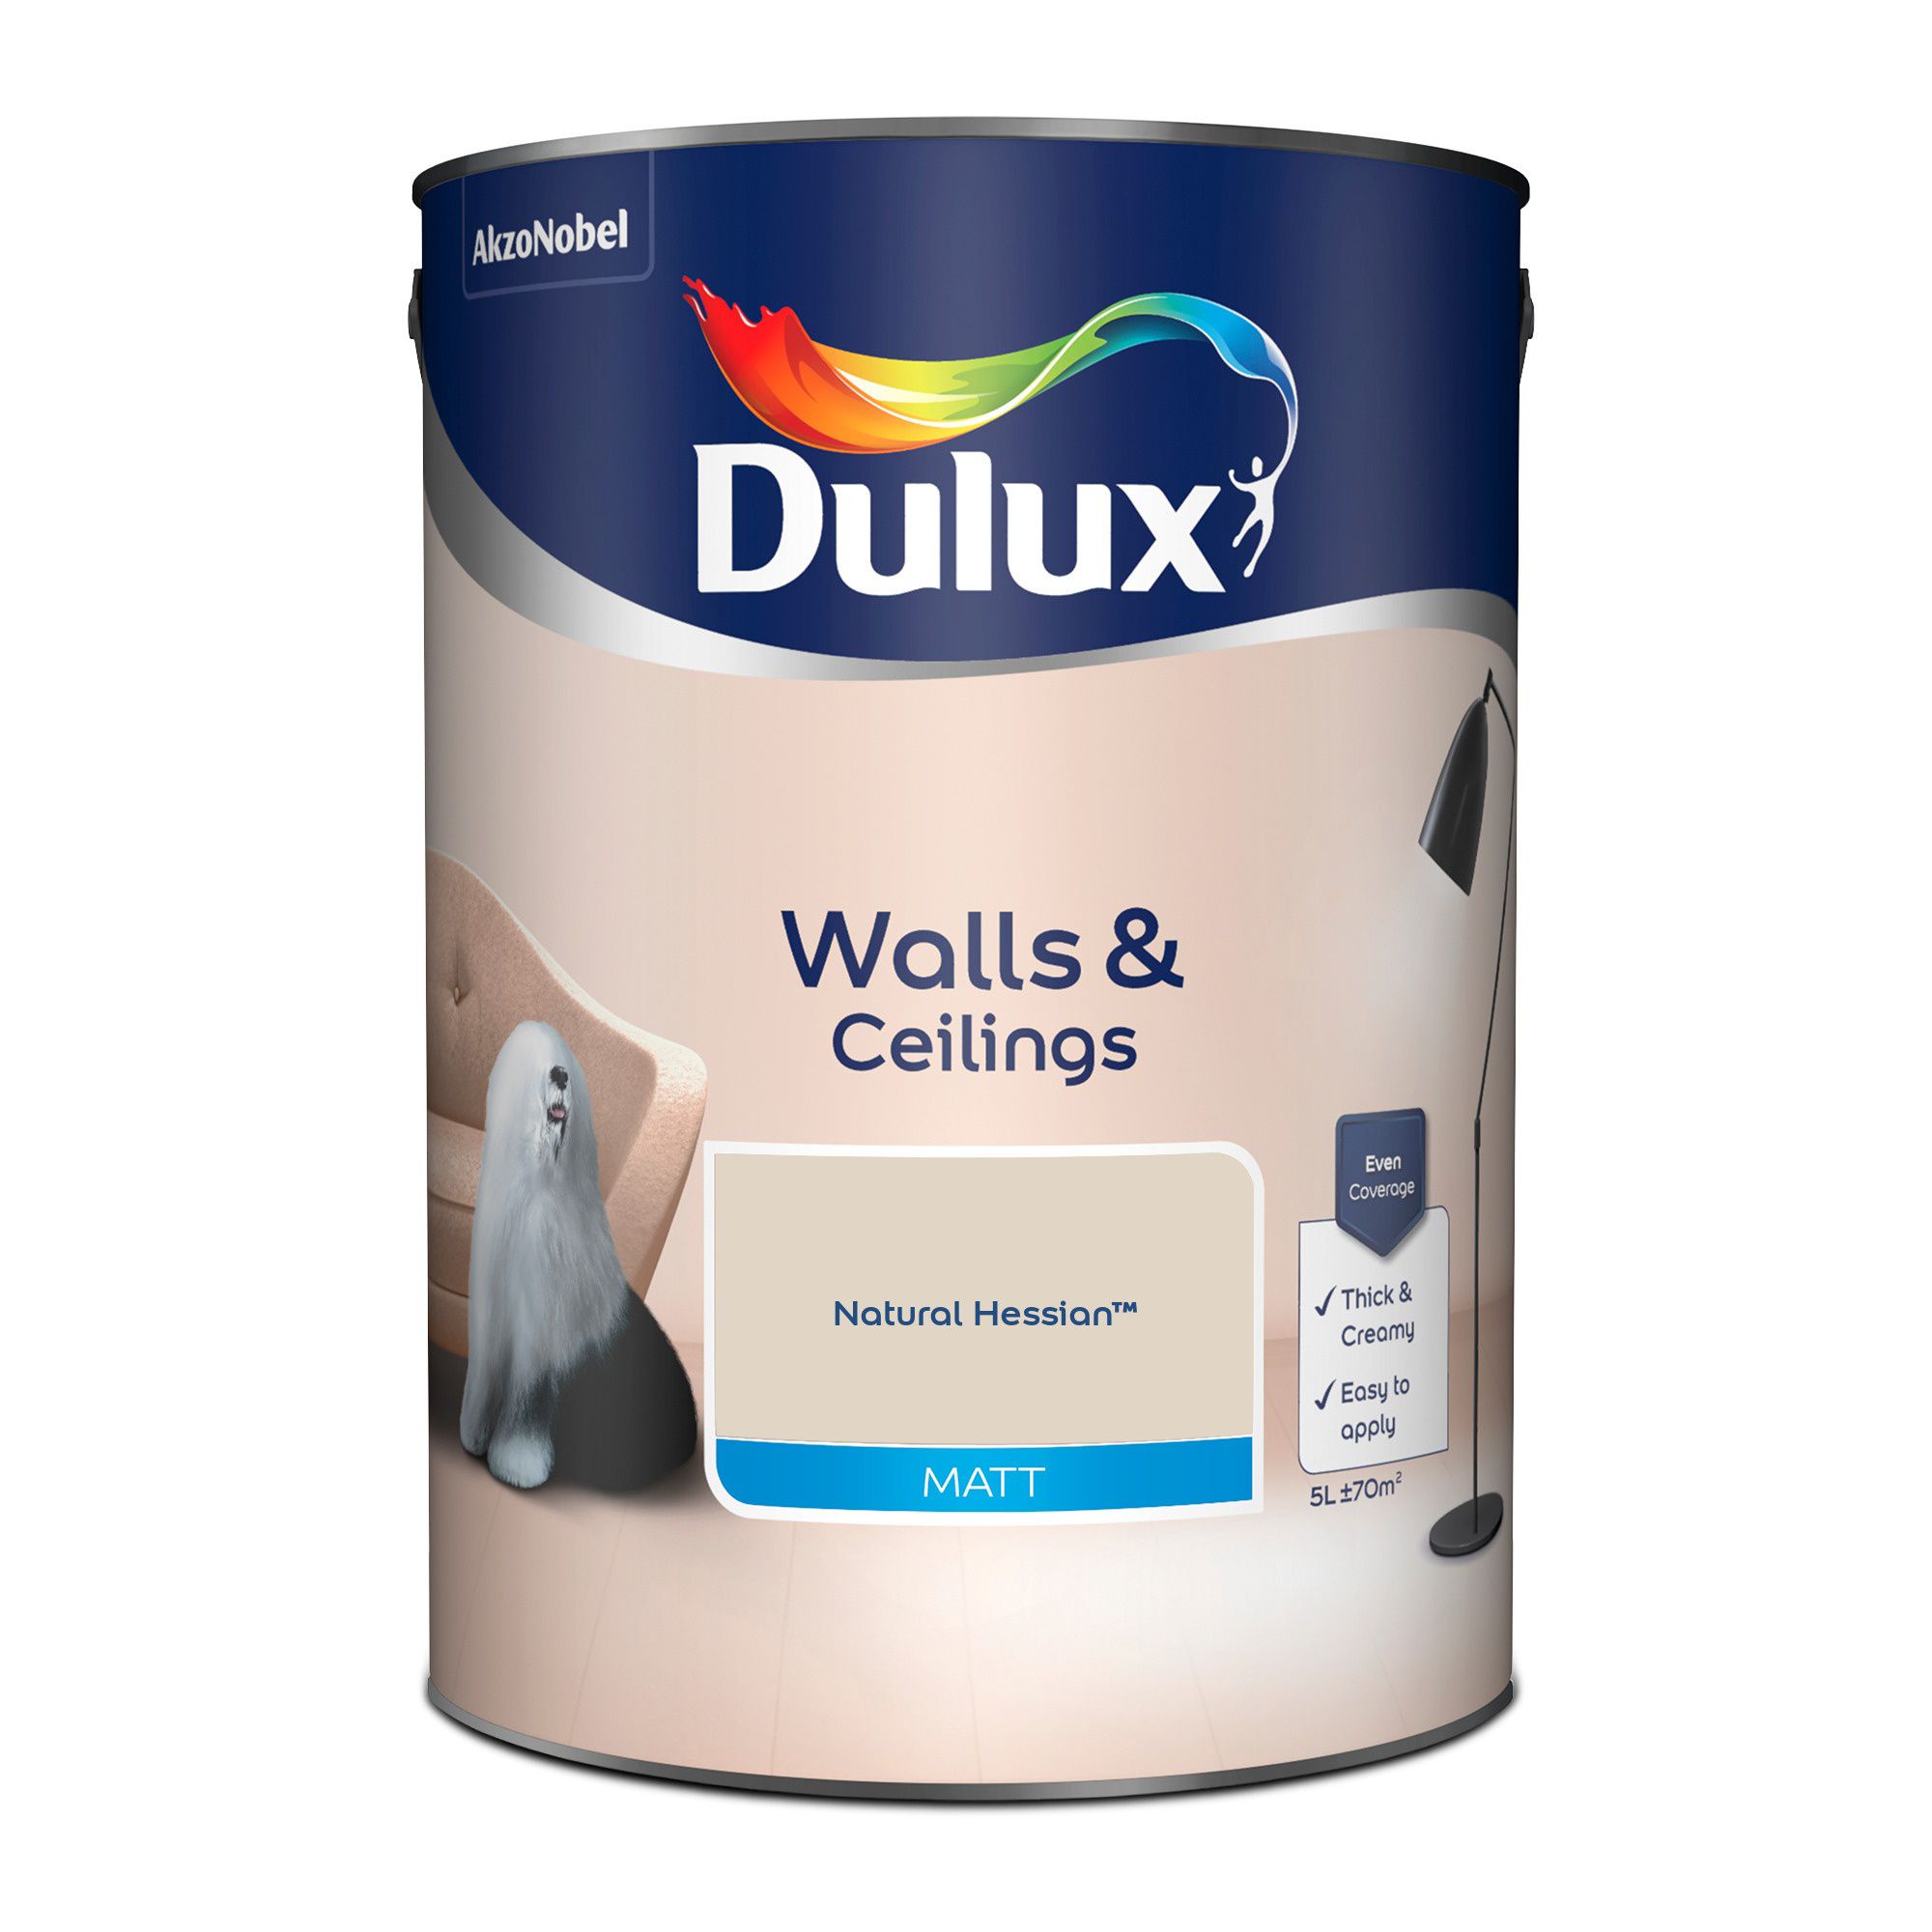 Dulux Walls & ceilings Natural hessian Matt Emulsion paint, 5L